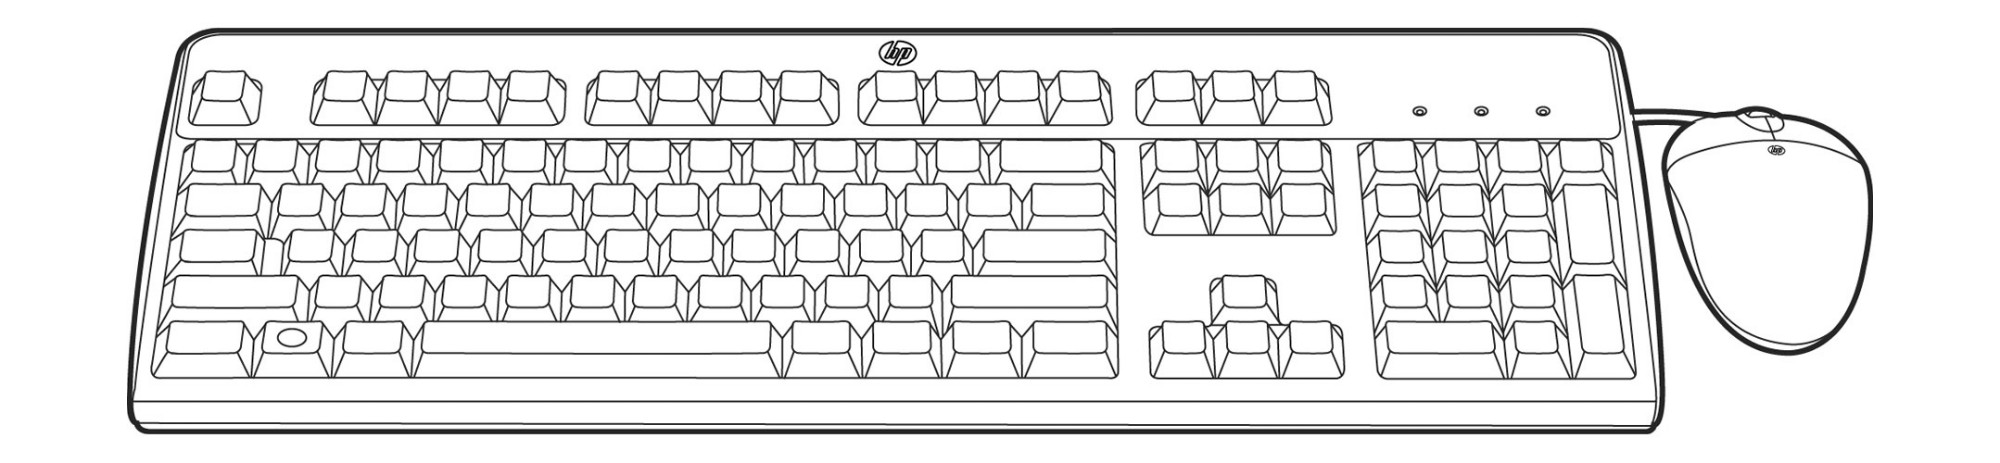 Hewlett Packard Enterprise 672097-353 keyboard Mouse included USB QWERTY Black